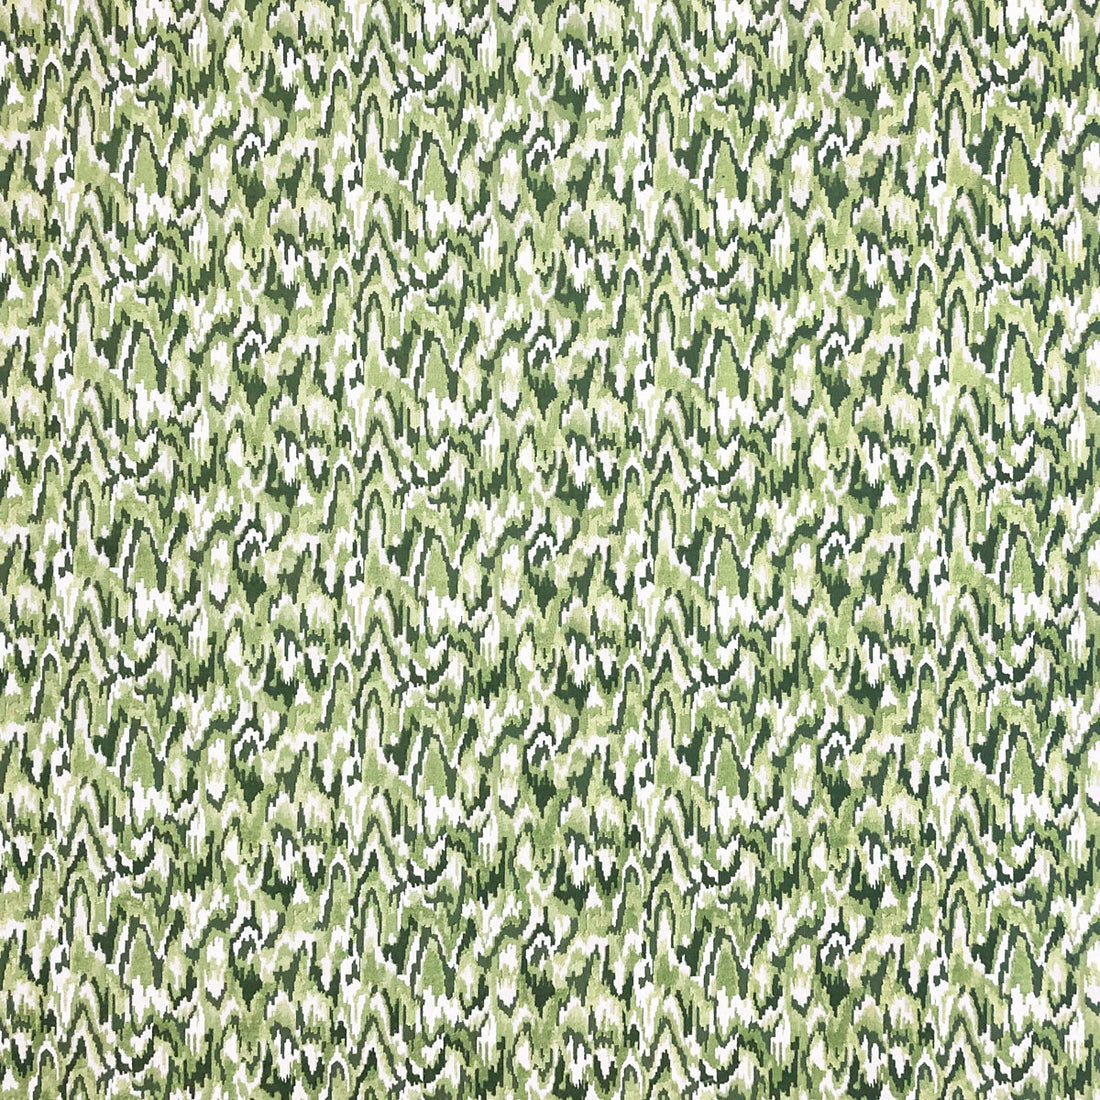 Teodora fabric in verde color - pattern LCT1064.002.0 - by Gaston y Daniela in the Lorenzo Castillo VI collection